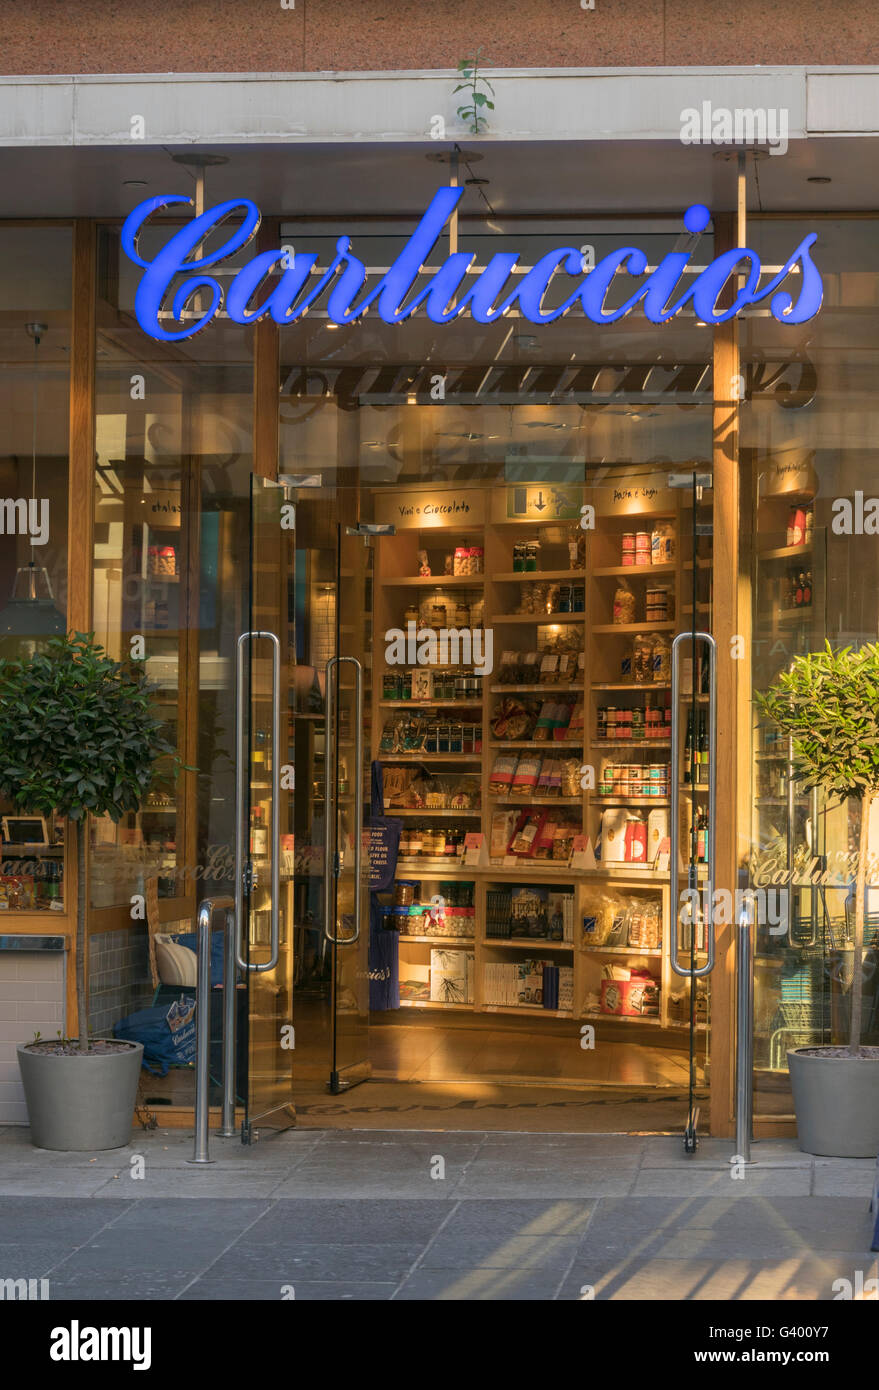 Entrance to Carluccios Italian delicatessen, Glasgow, Scotland, UK, Stock Photo